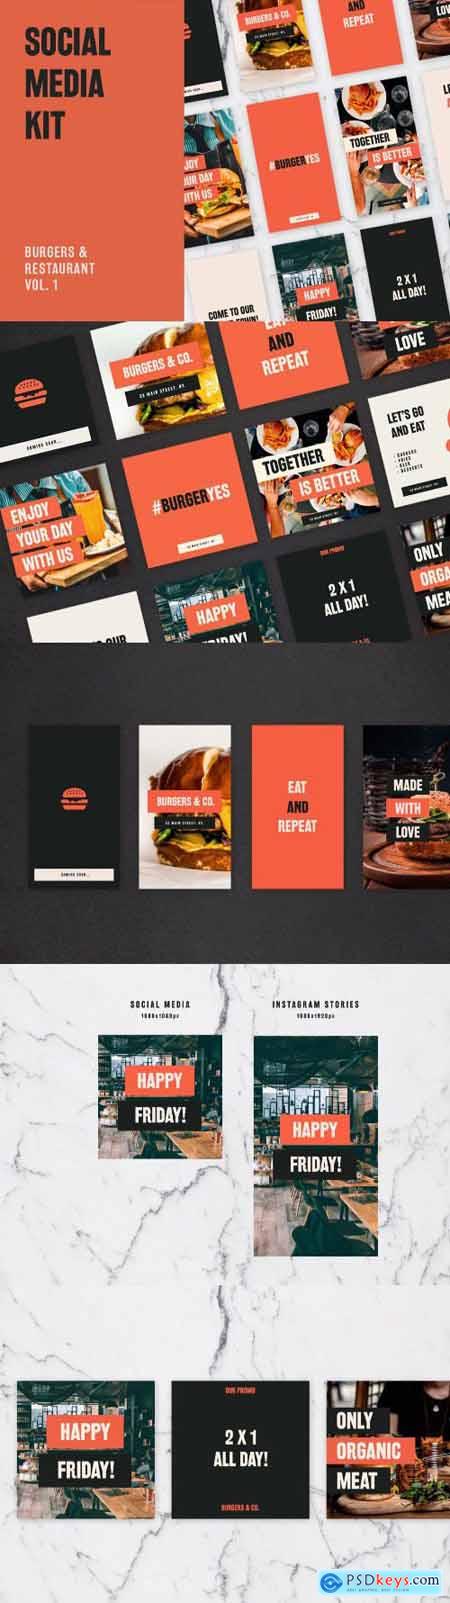 Burgers and Restaurant Social Media Kit